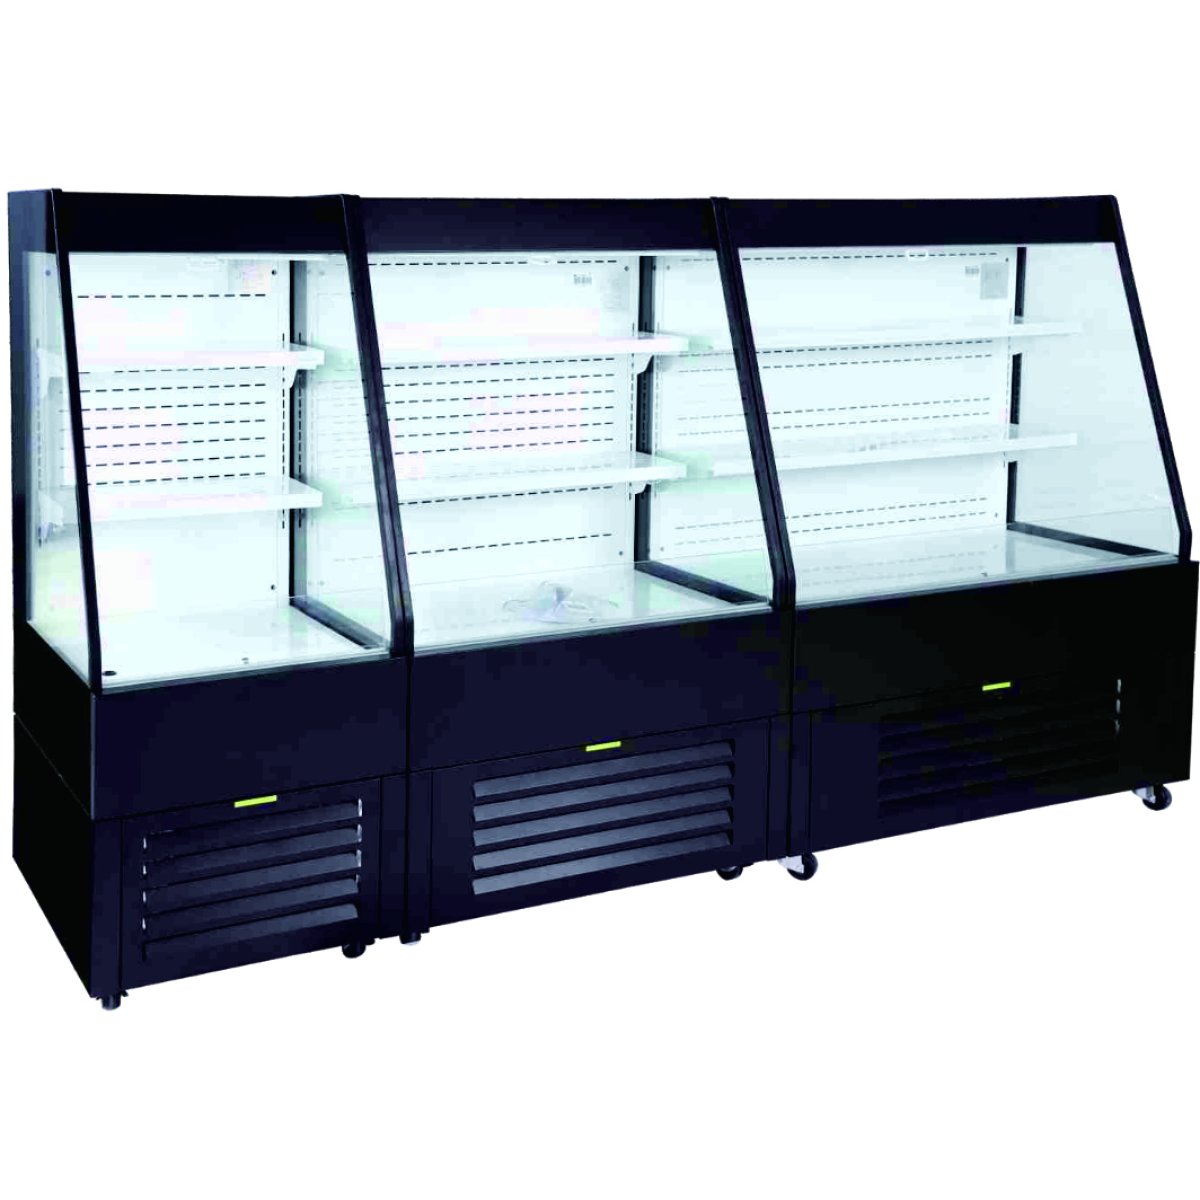 Multi Deck Refrigerator 300 litres with Night Curtain Black 900x700x1540mm |  LG1200M2W